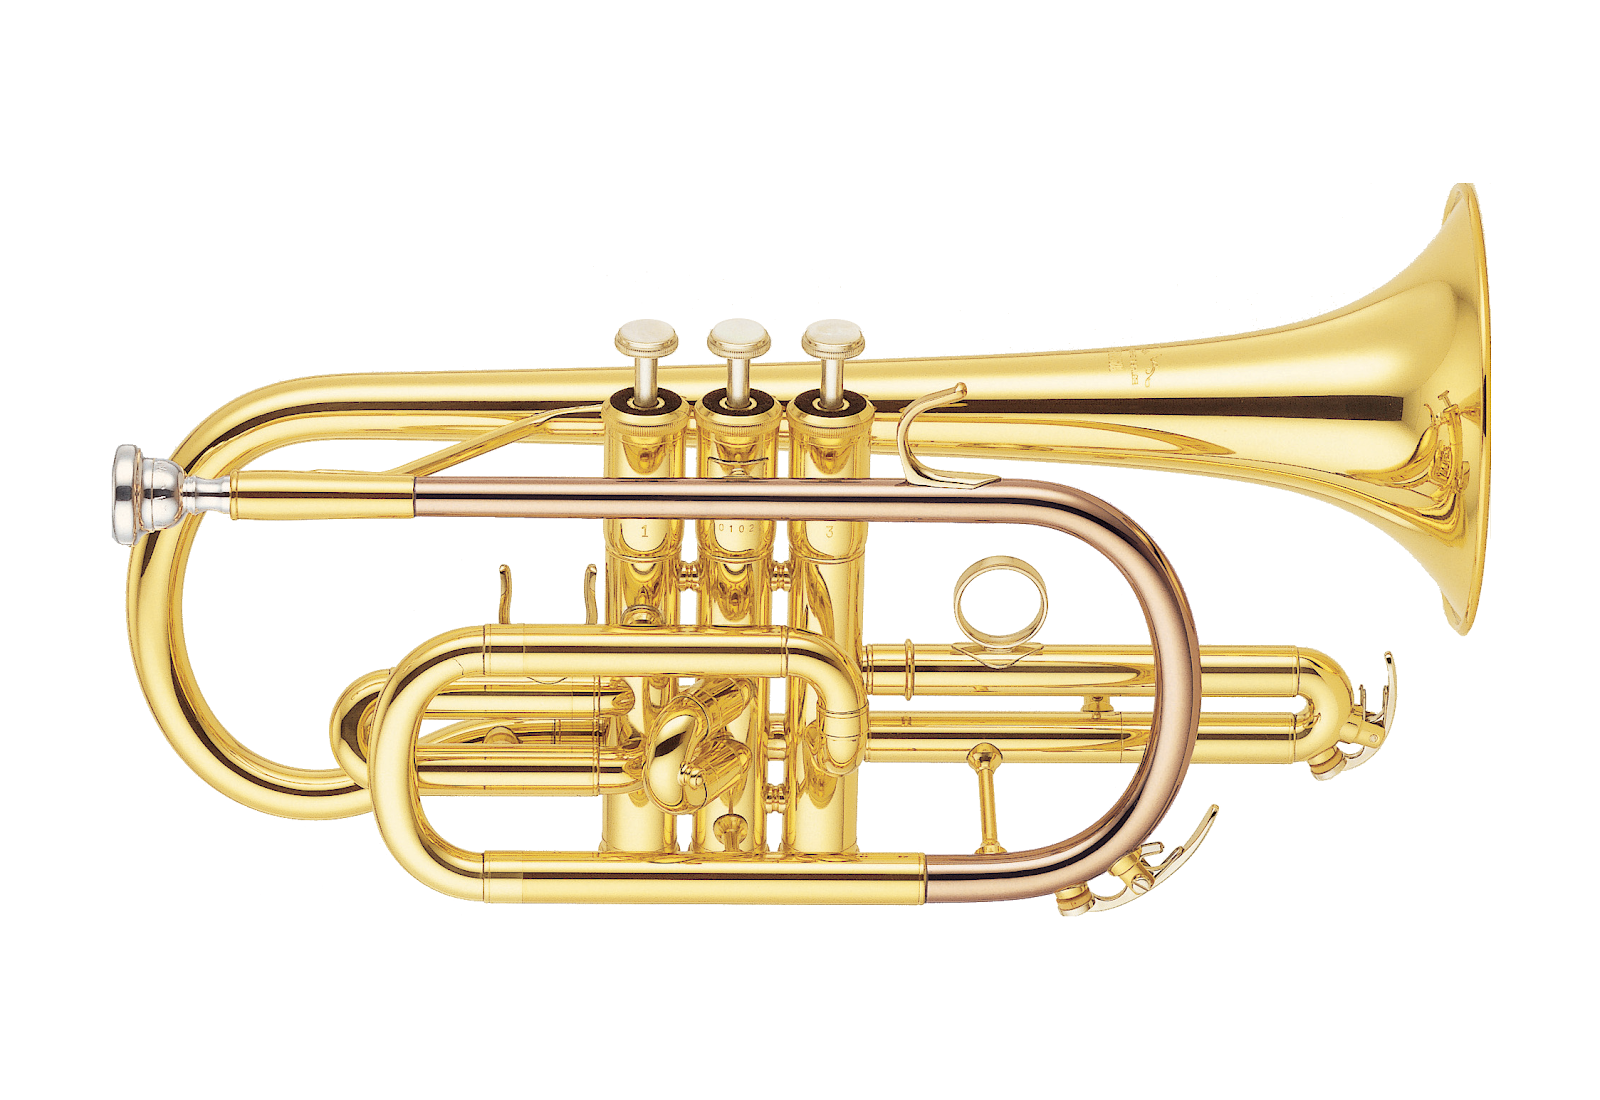 The Cornet Trumpet